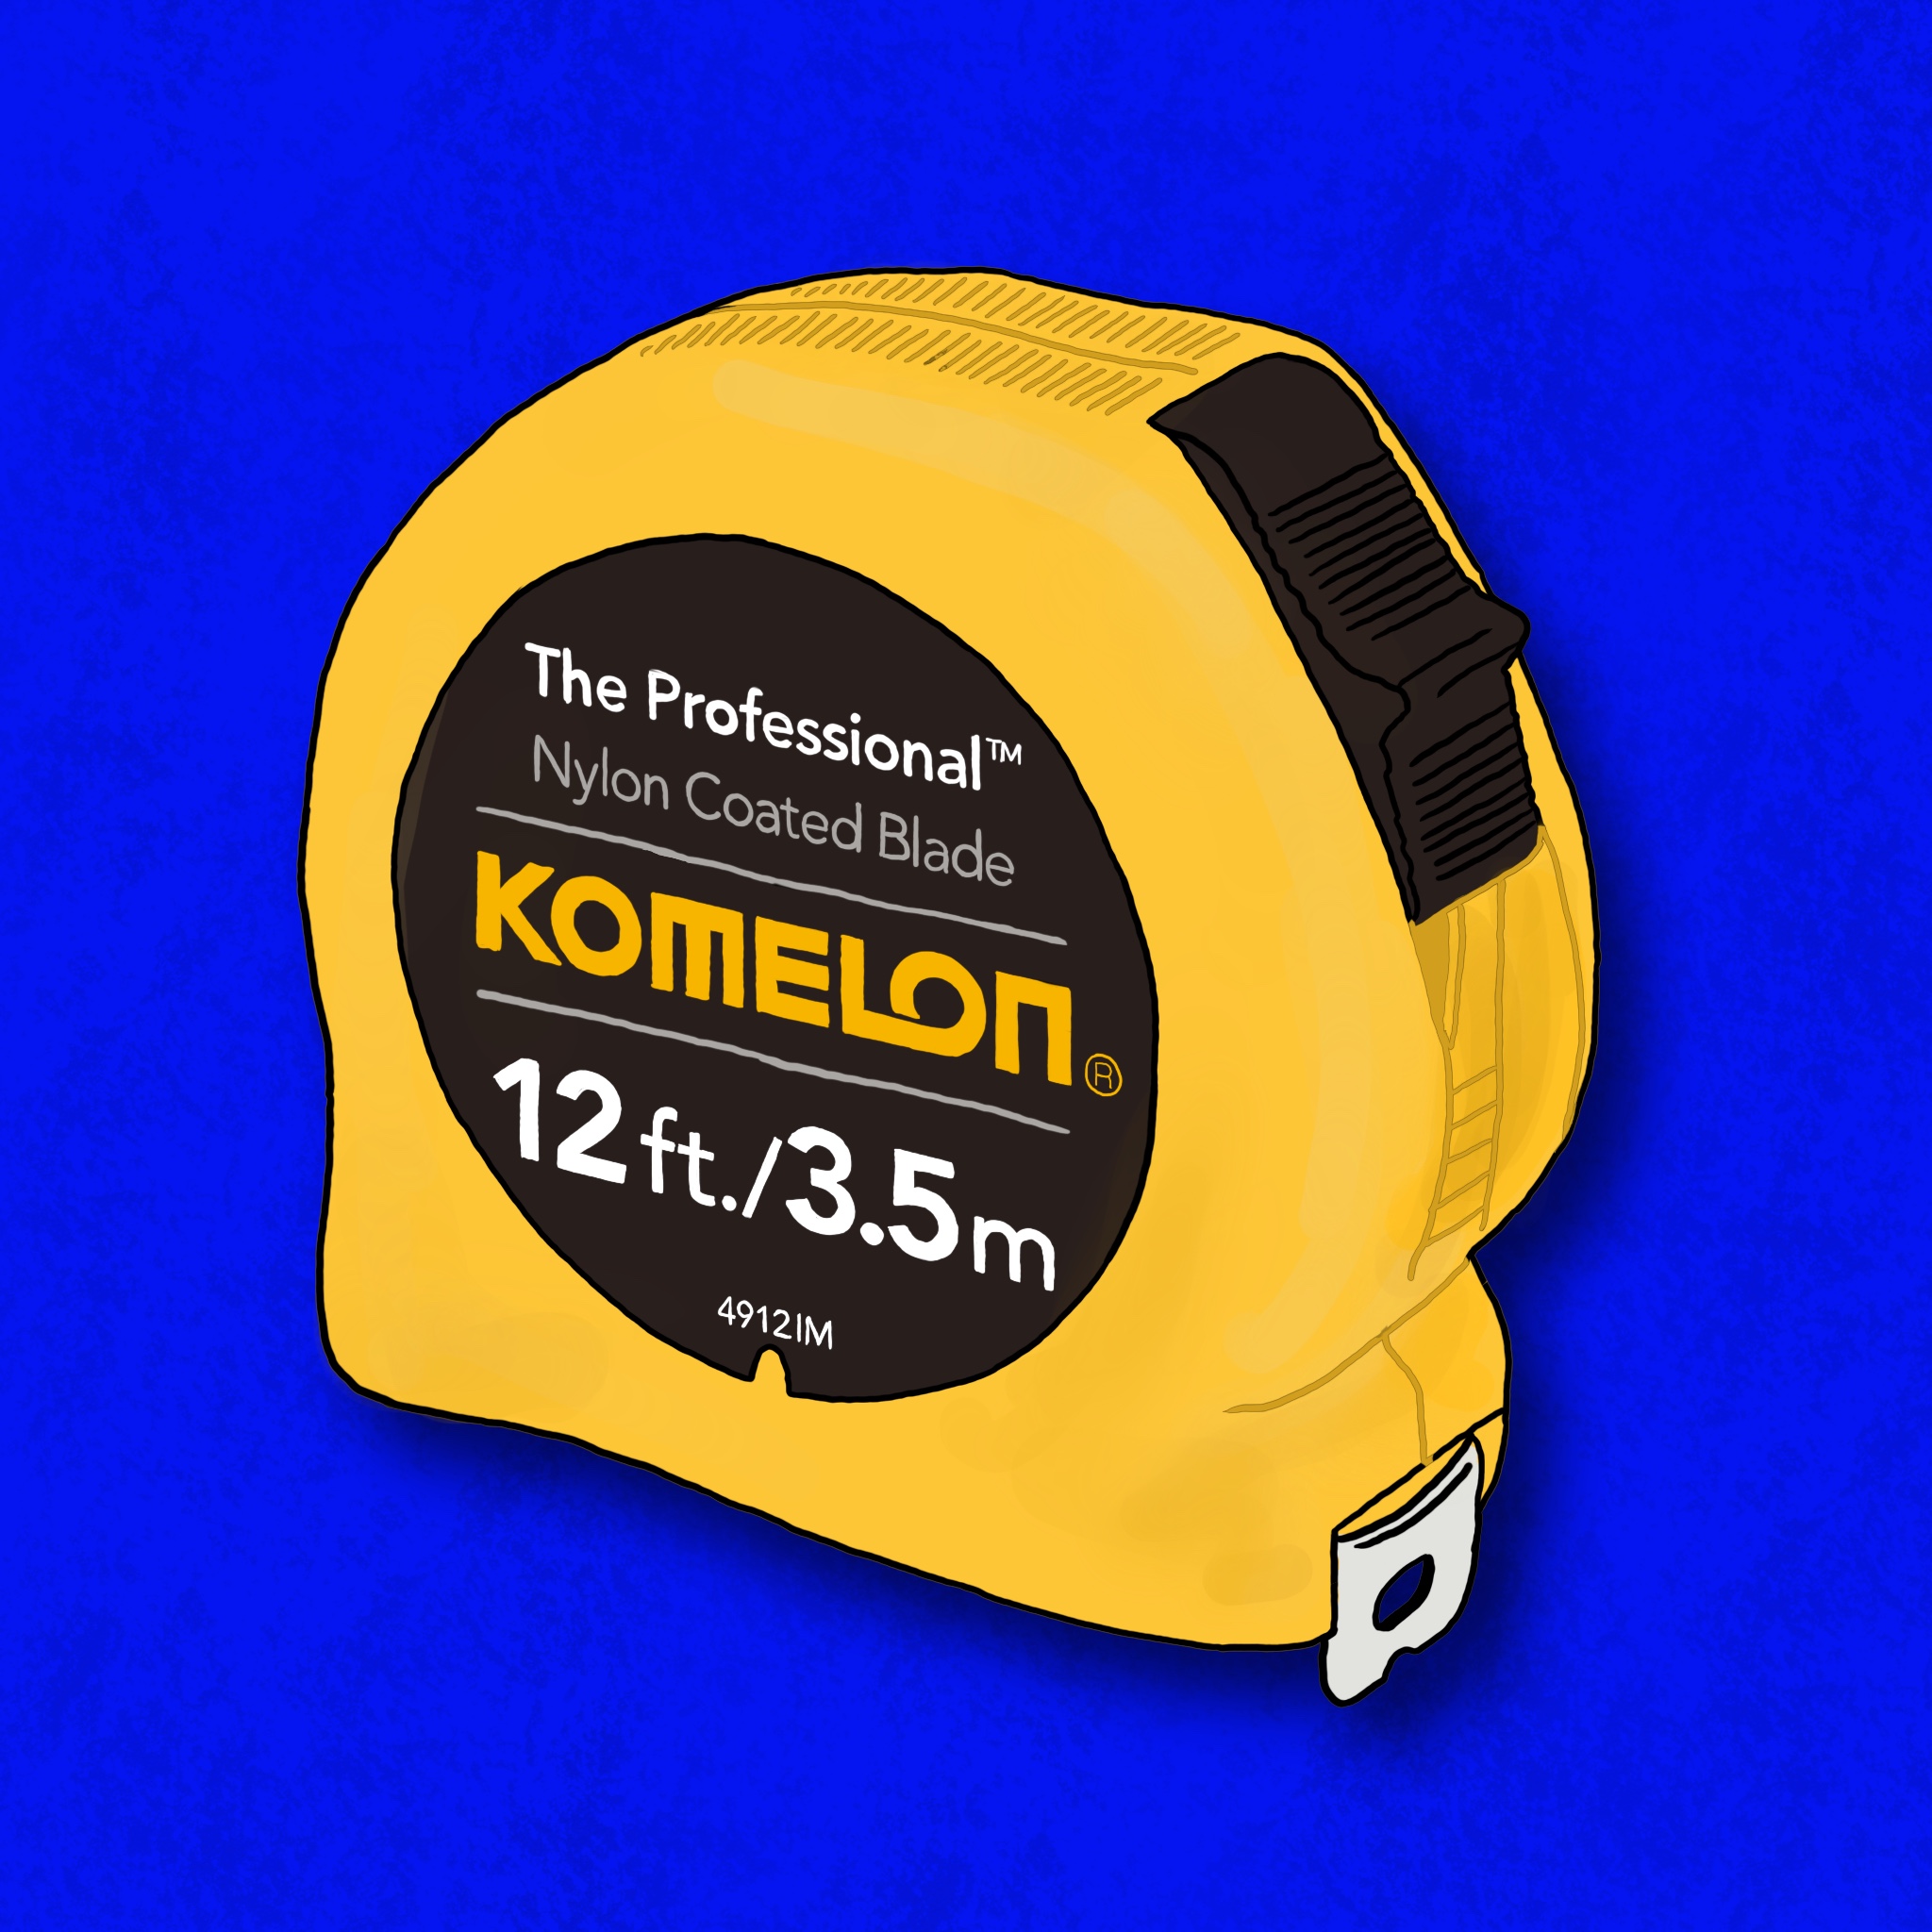 A sketch done in Procreate of a Komelon tape measure.